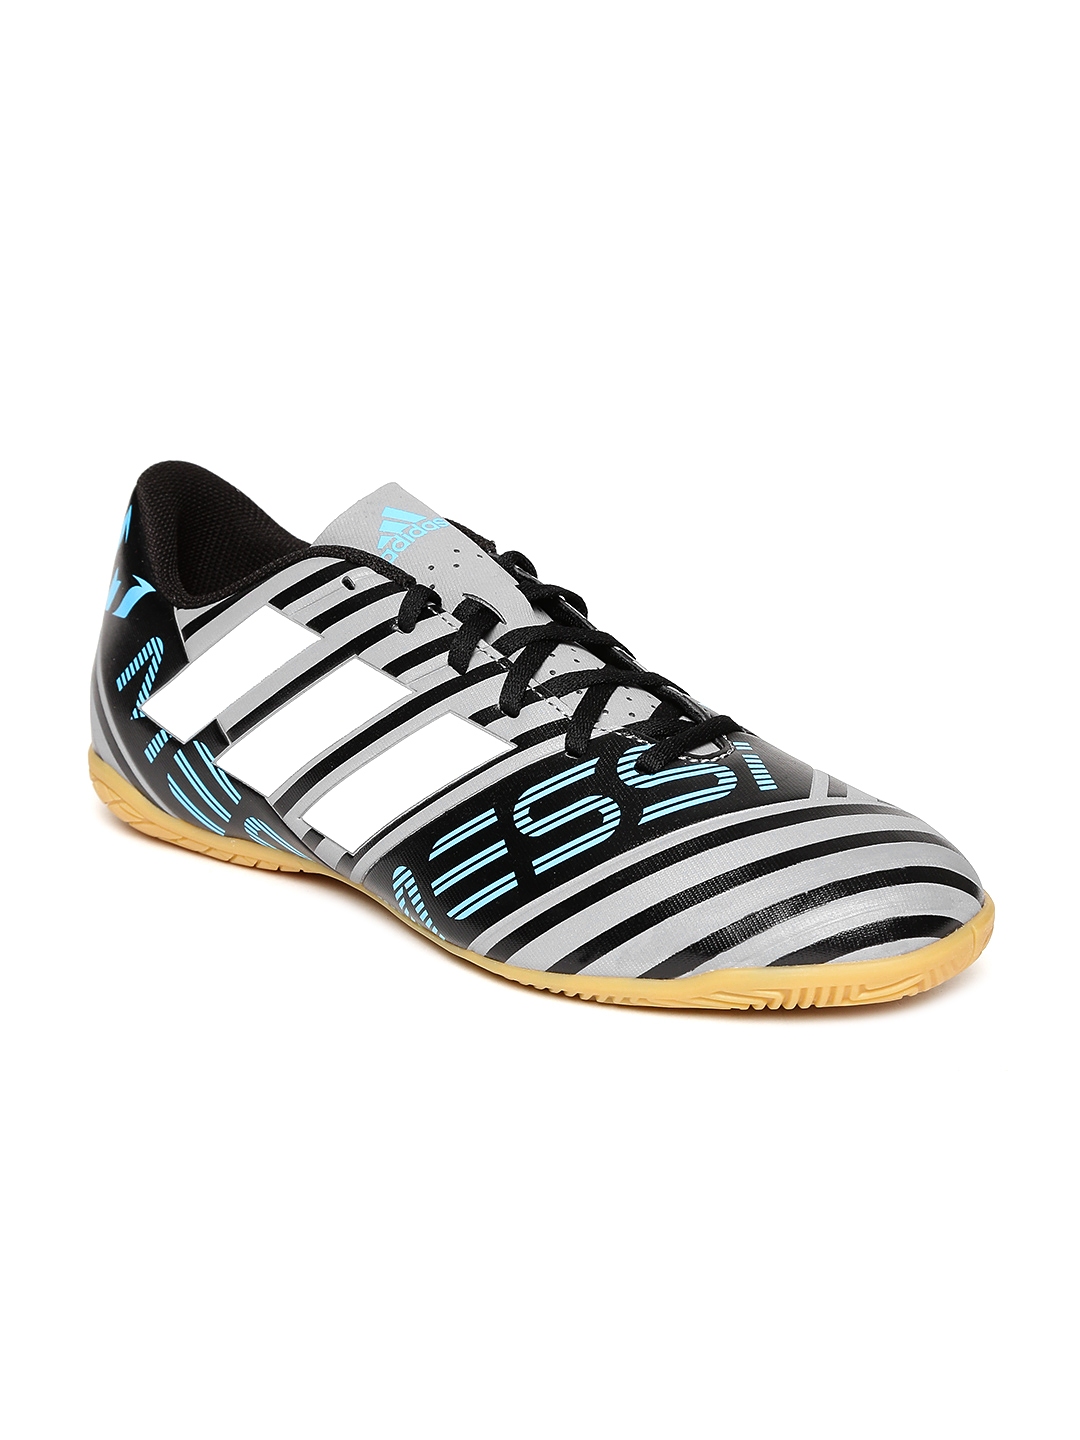 Buy ADIDAS Men Grey & Black NEMEZIZ Messi Tango 17.4 Striped Football Shoes - Sports Shoes for Men | Myntra